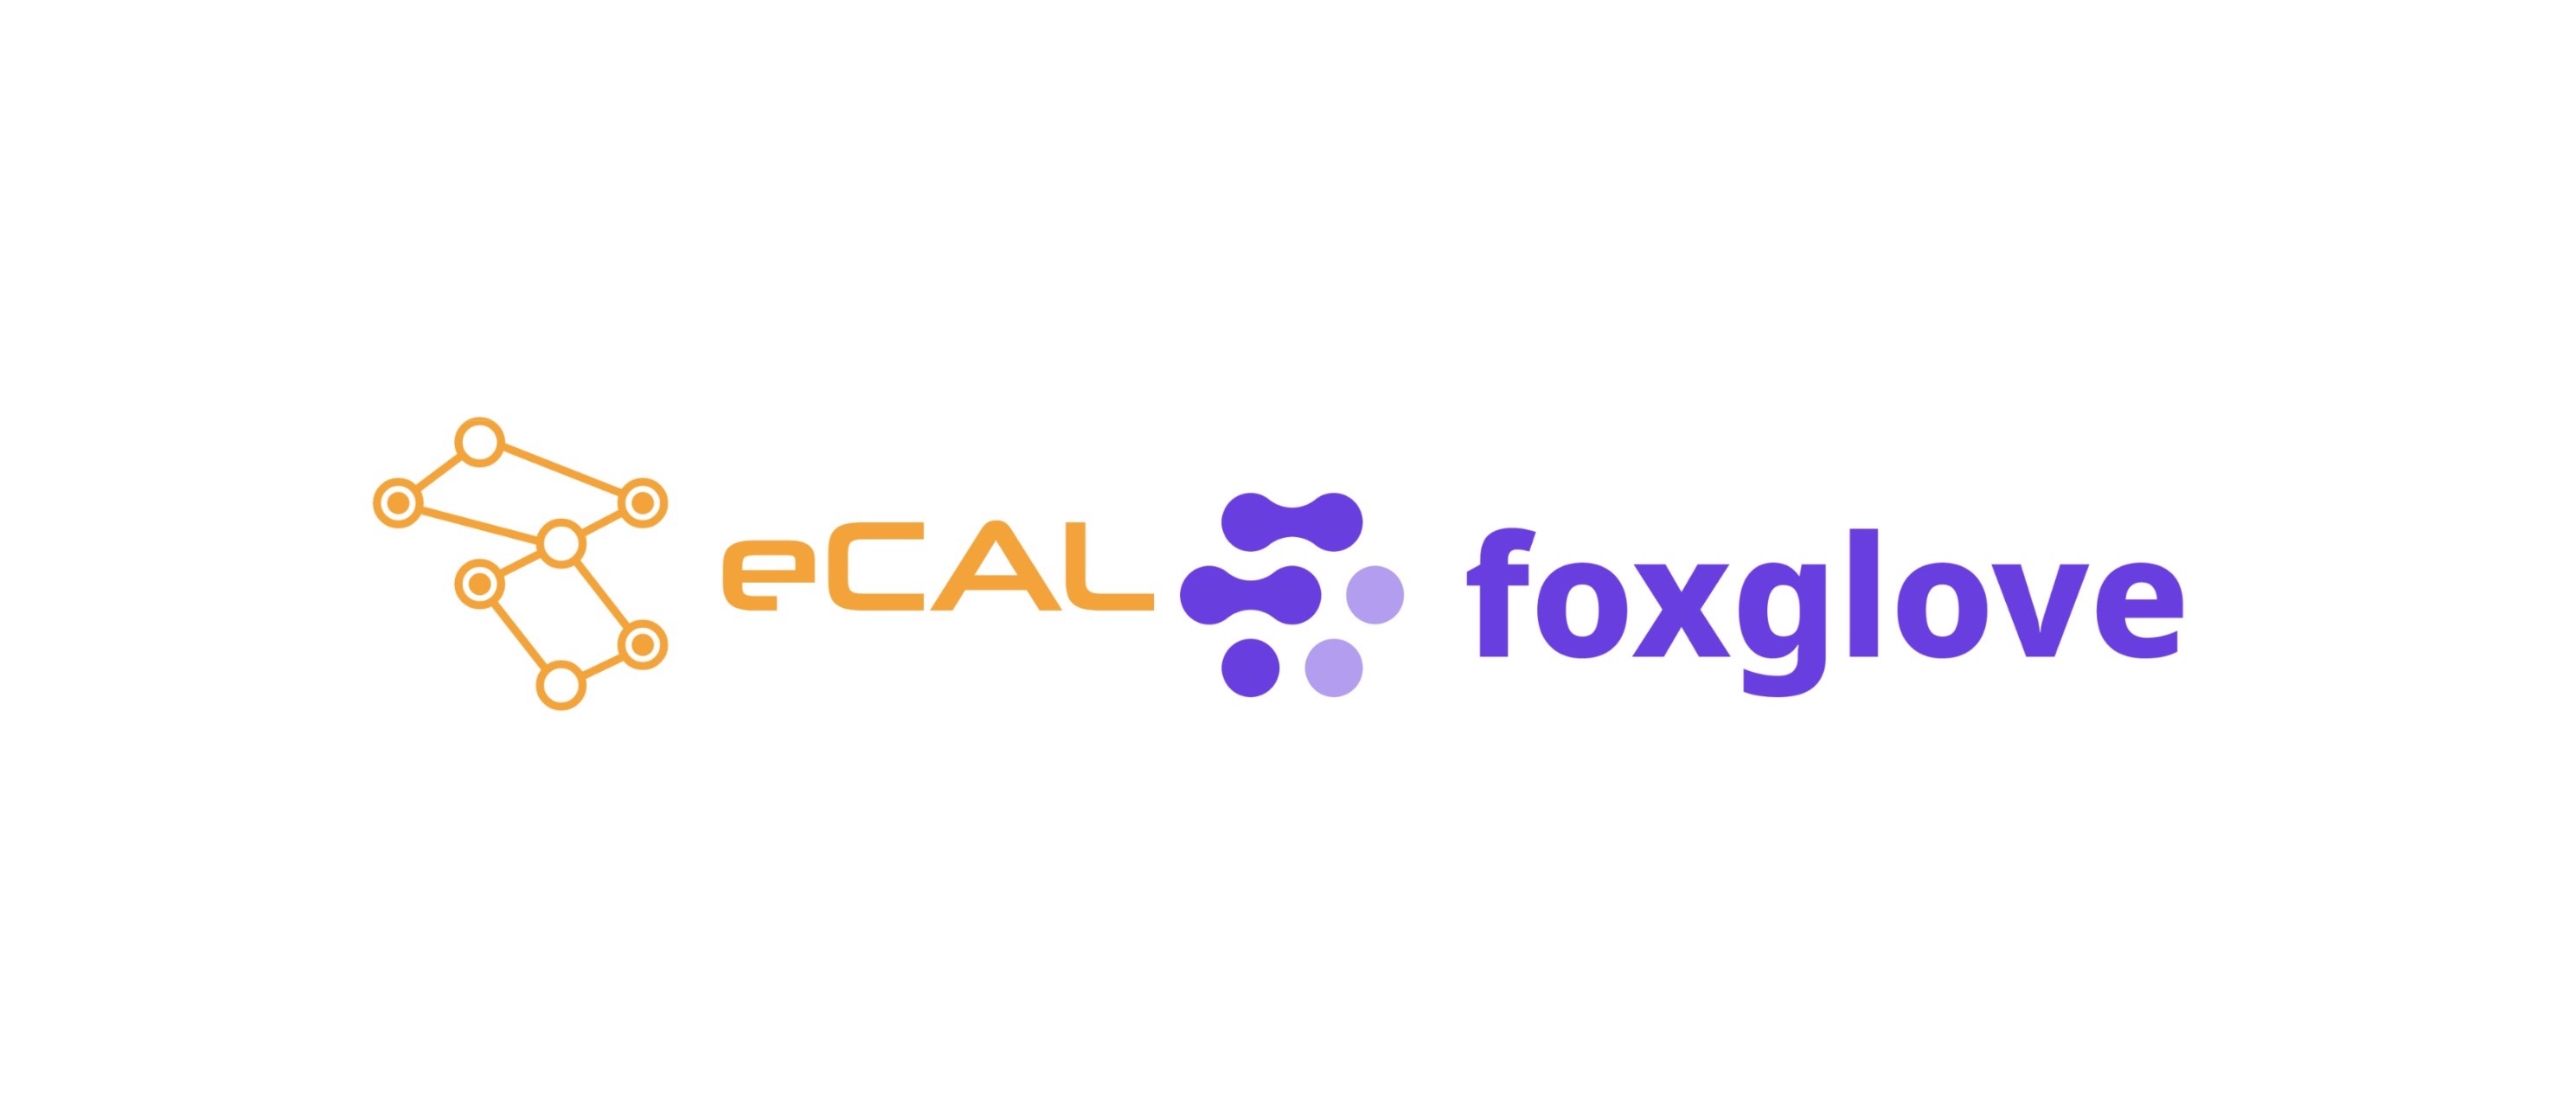 The Eclipse-eCAL Project Releases a WebSocket Bridge for Foxglove Studio